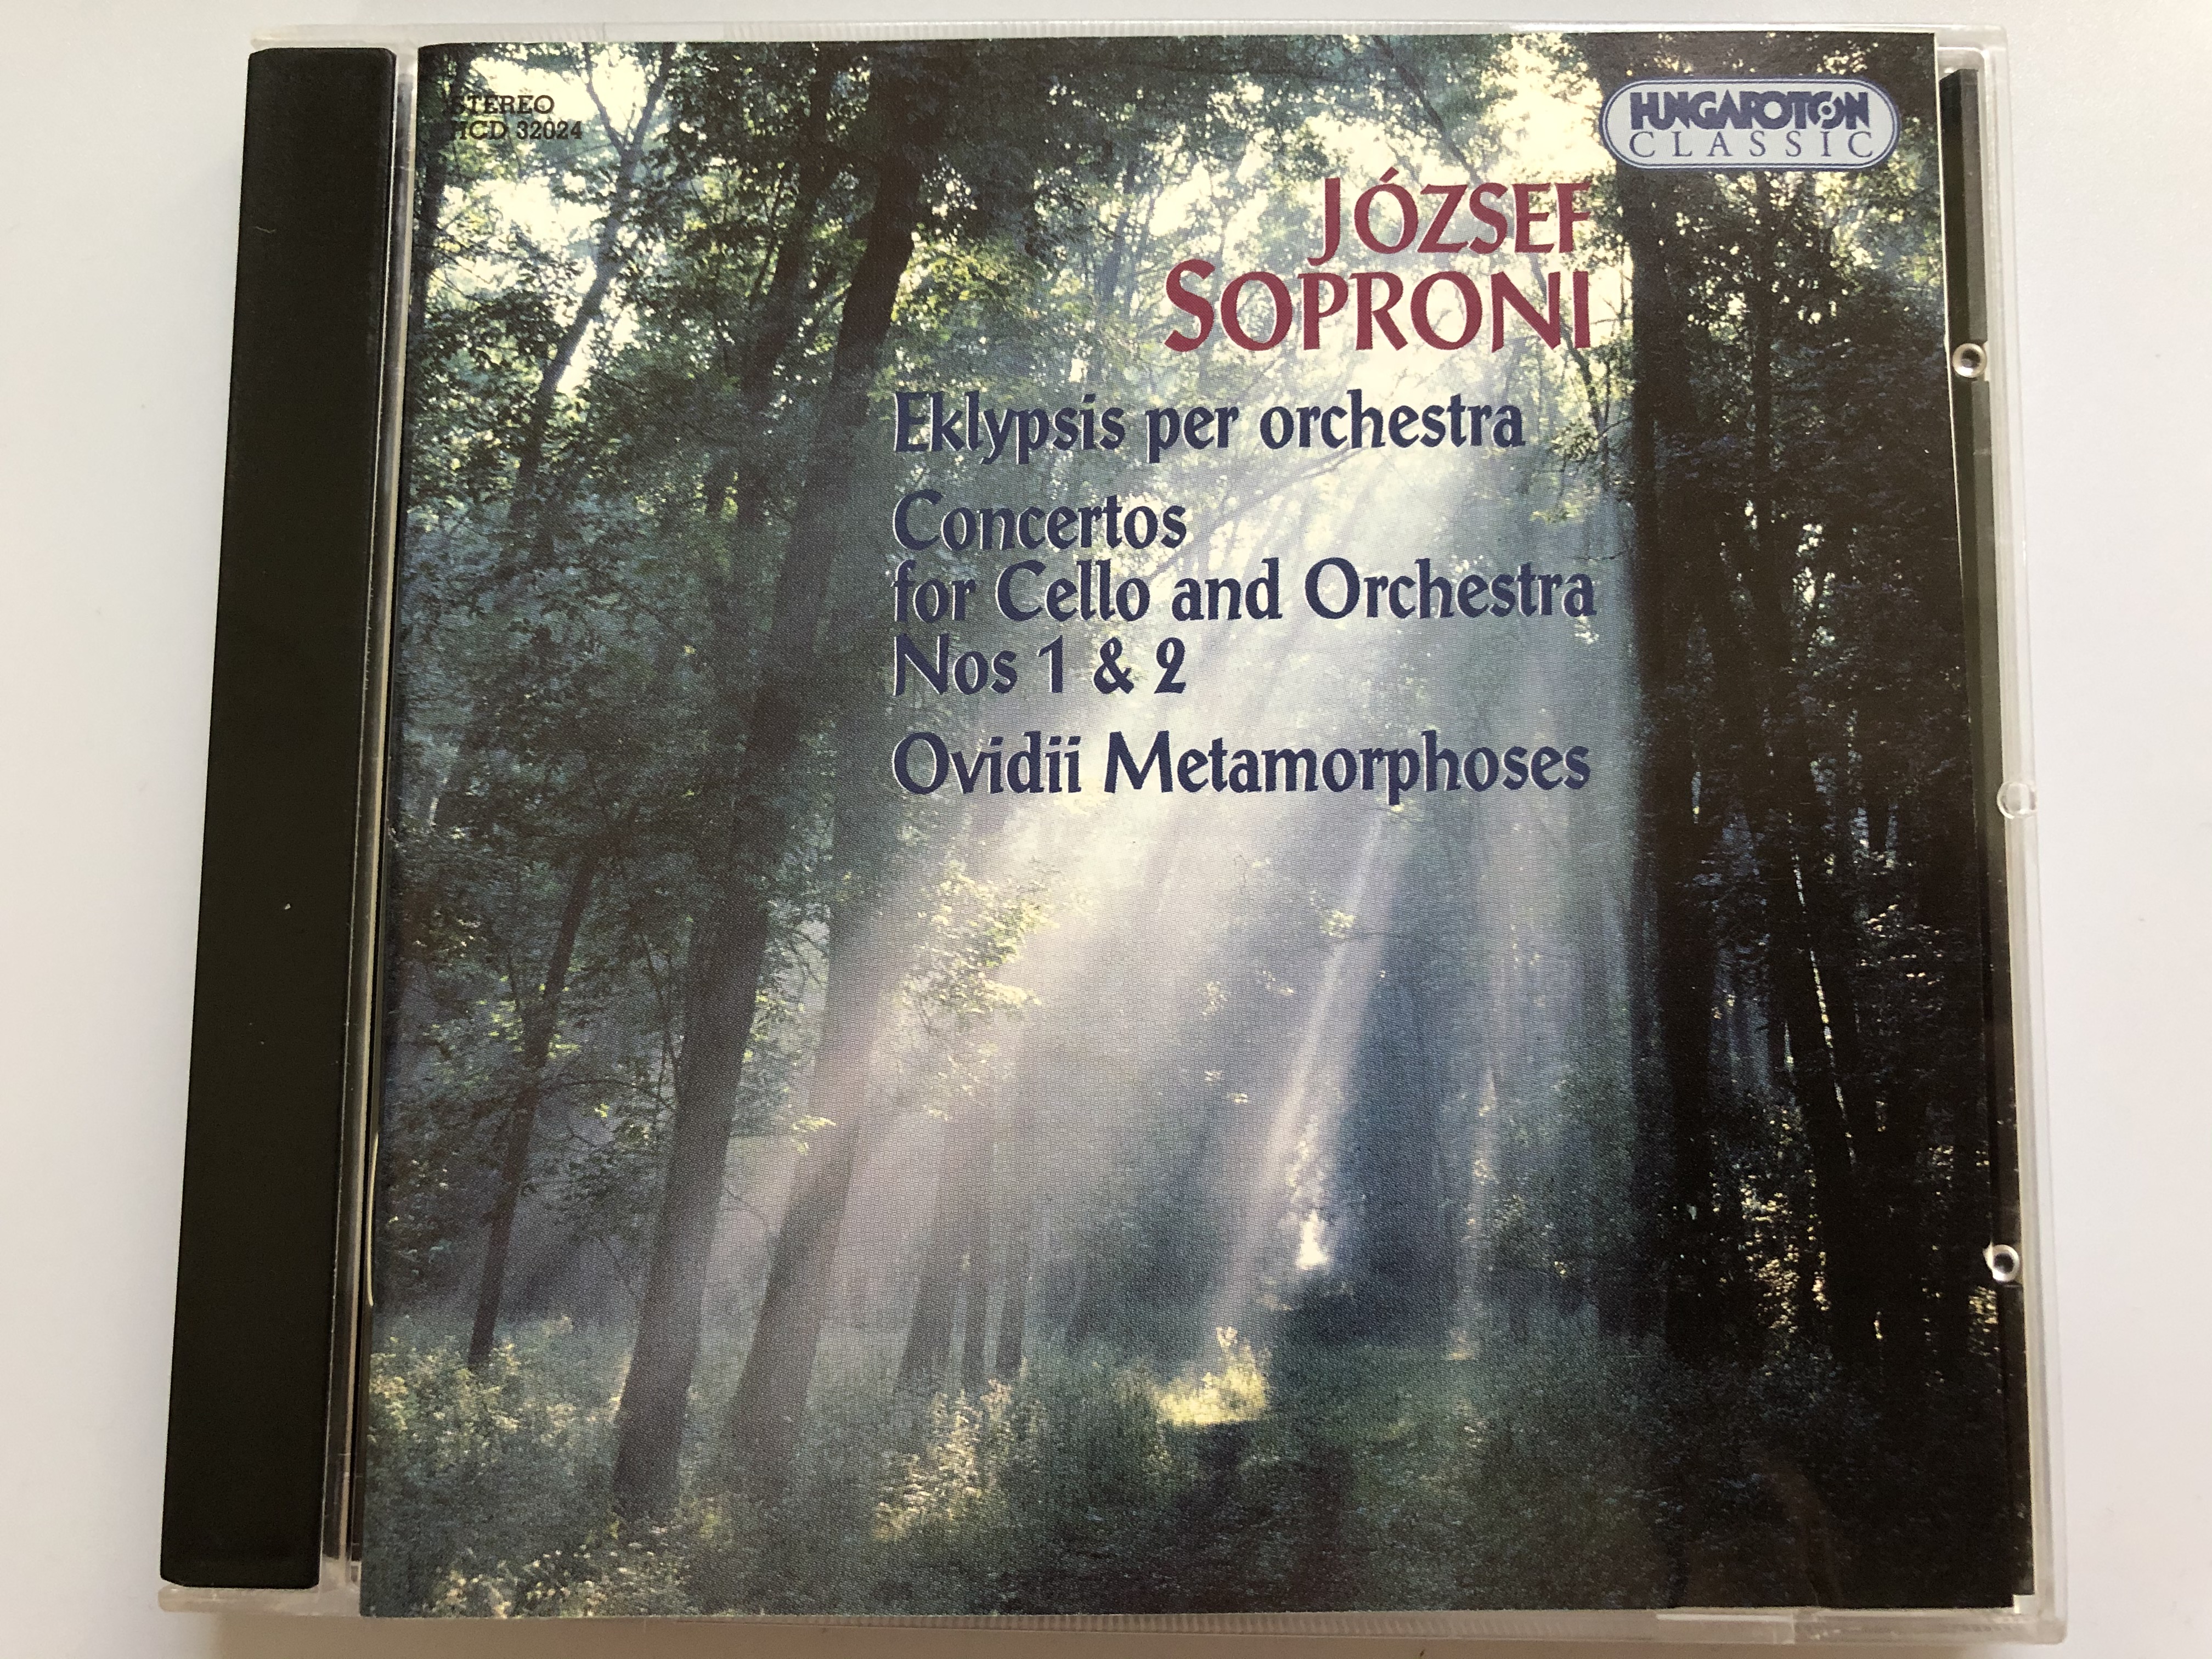 j-zsef-soproni-eklypsis-per-orchestra-concertos-for-cello-and-orchestra-nos-1-2-ovidii-metamorphoses-hungaroton-classic-audio-cd-2001-stereo-hcd-32024-1-.jpg